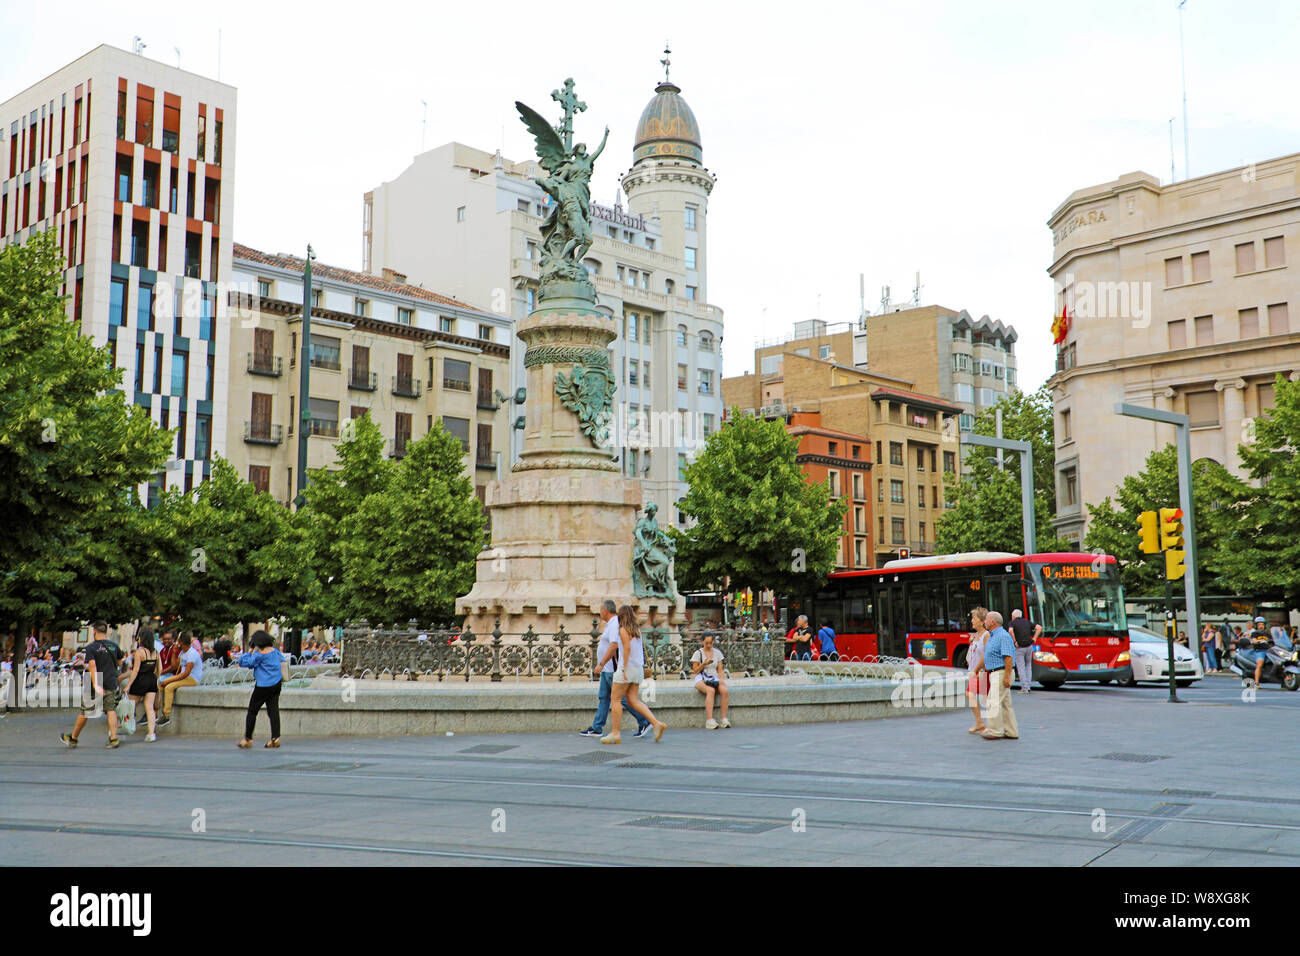 ZARAGOZA, SPAIN - JULY 1, 2019: Plaza Espana square, Zaragoza, Spain Stock Photo